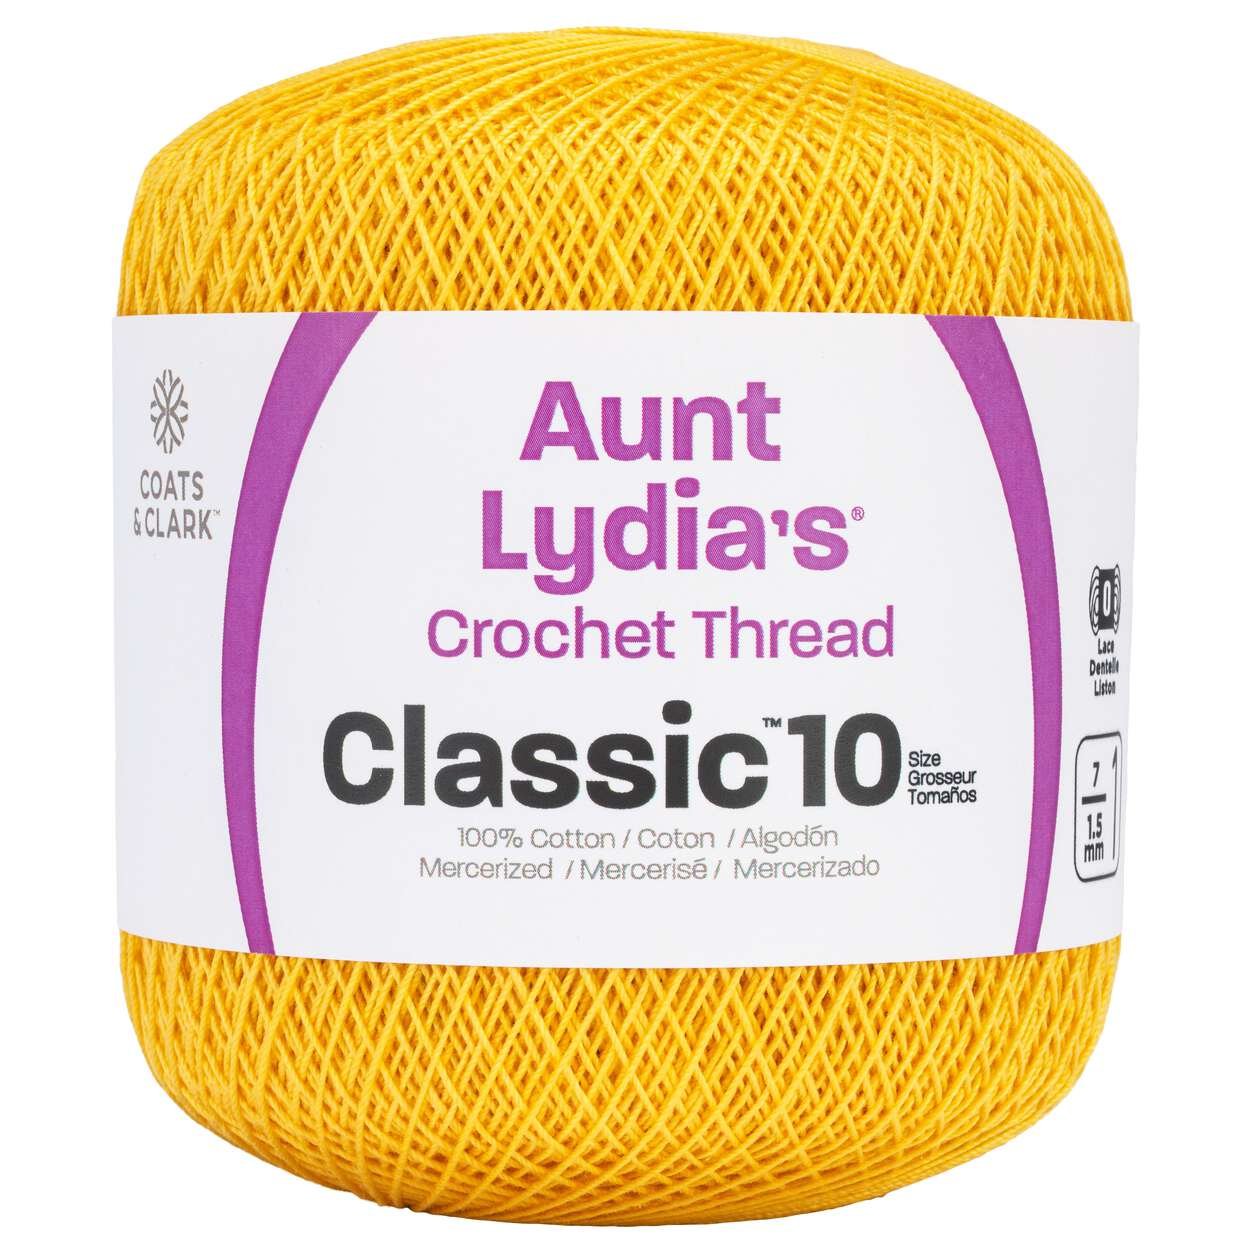 Aunt Lydia's Classic Crochet Thread